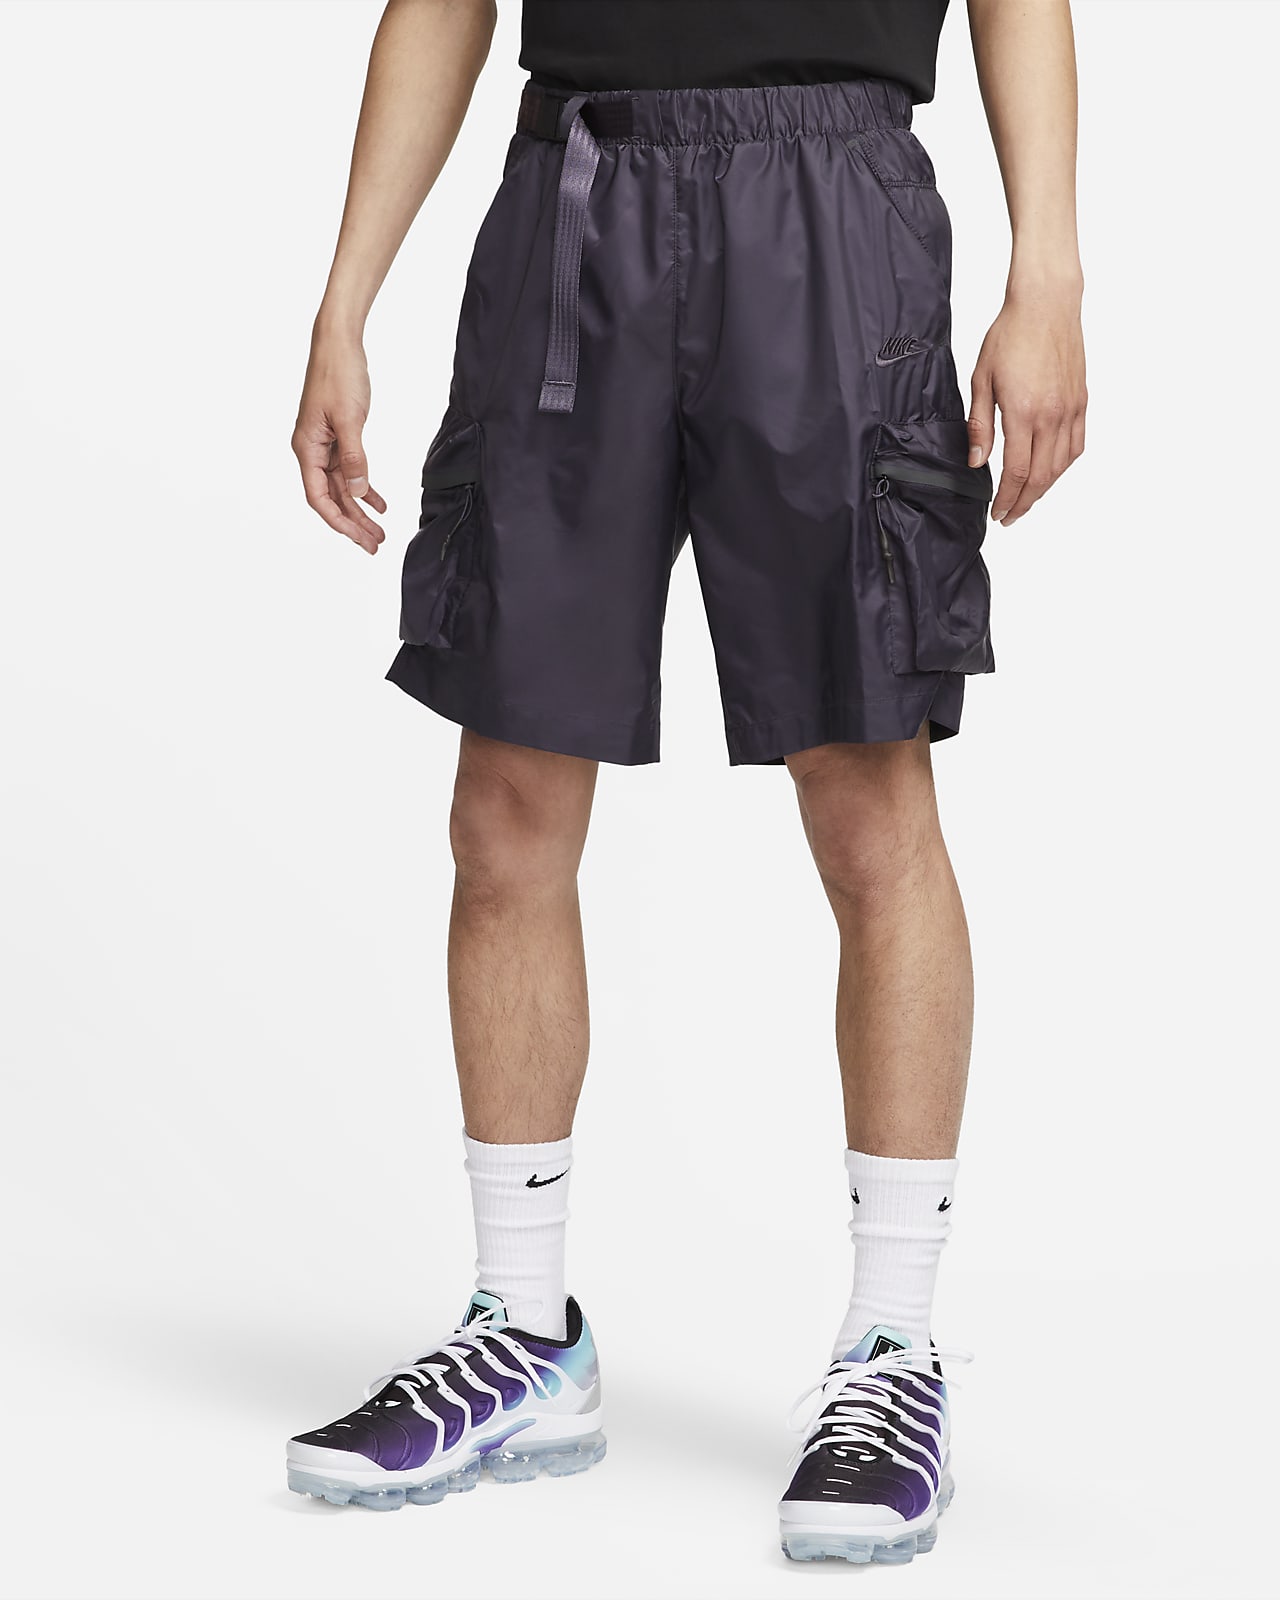 Nikeナイキ スポーツウェア テックパック メンズ ウーブンスニーカーパンツ